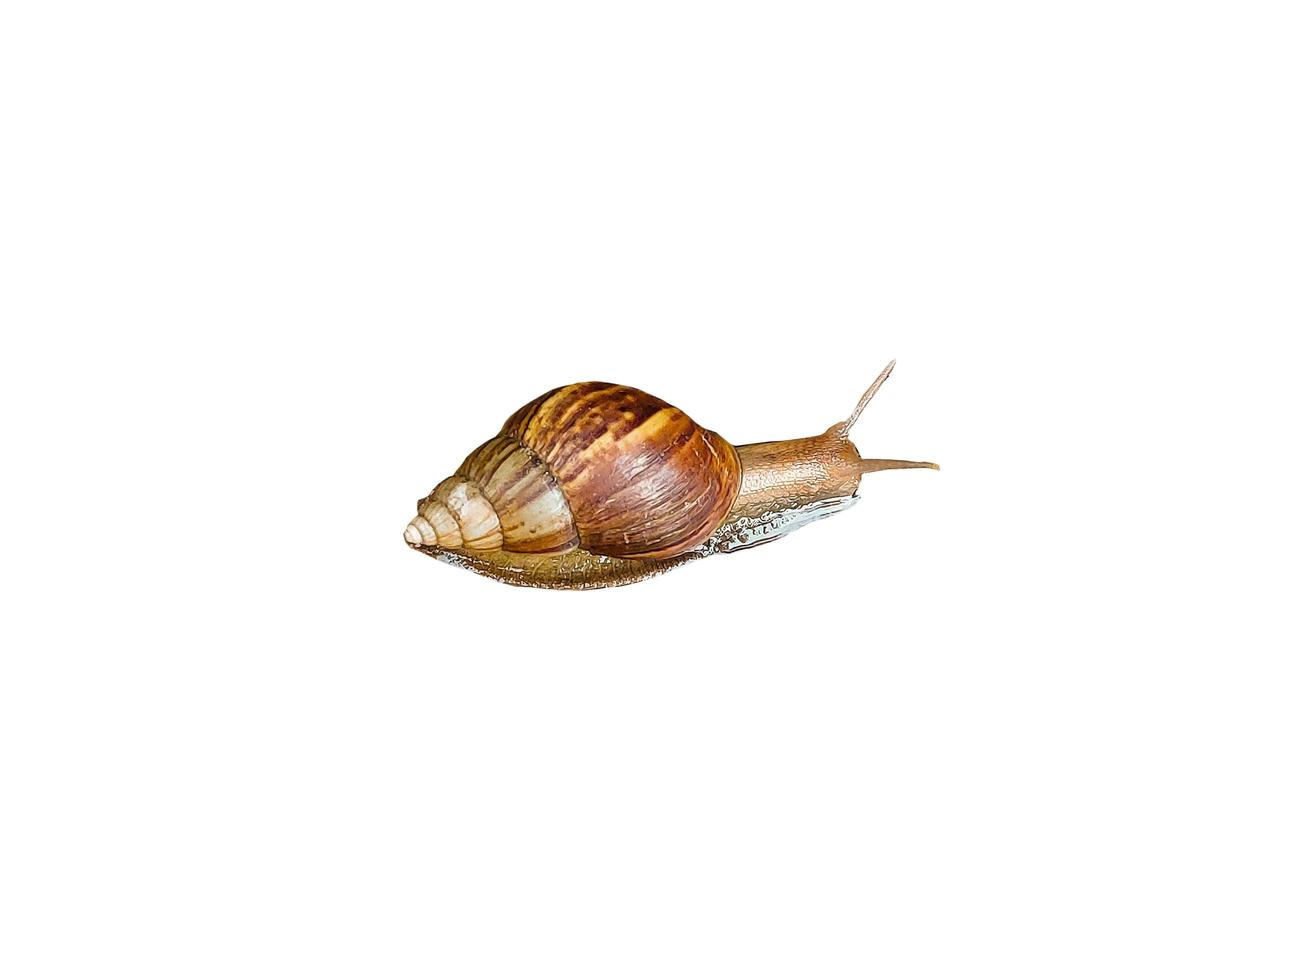 snail on a white background photo